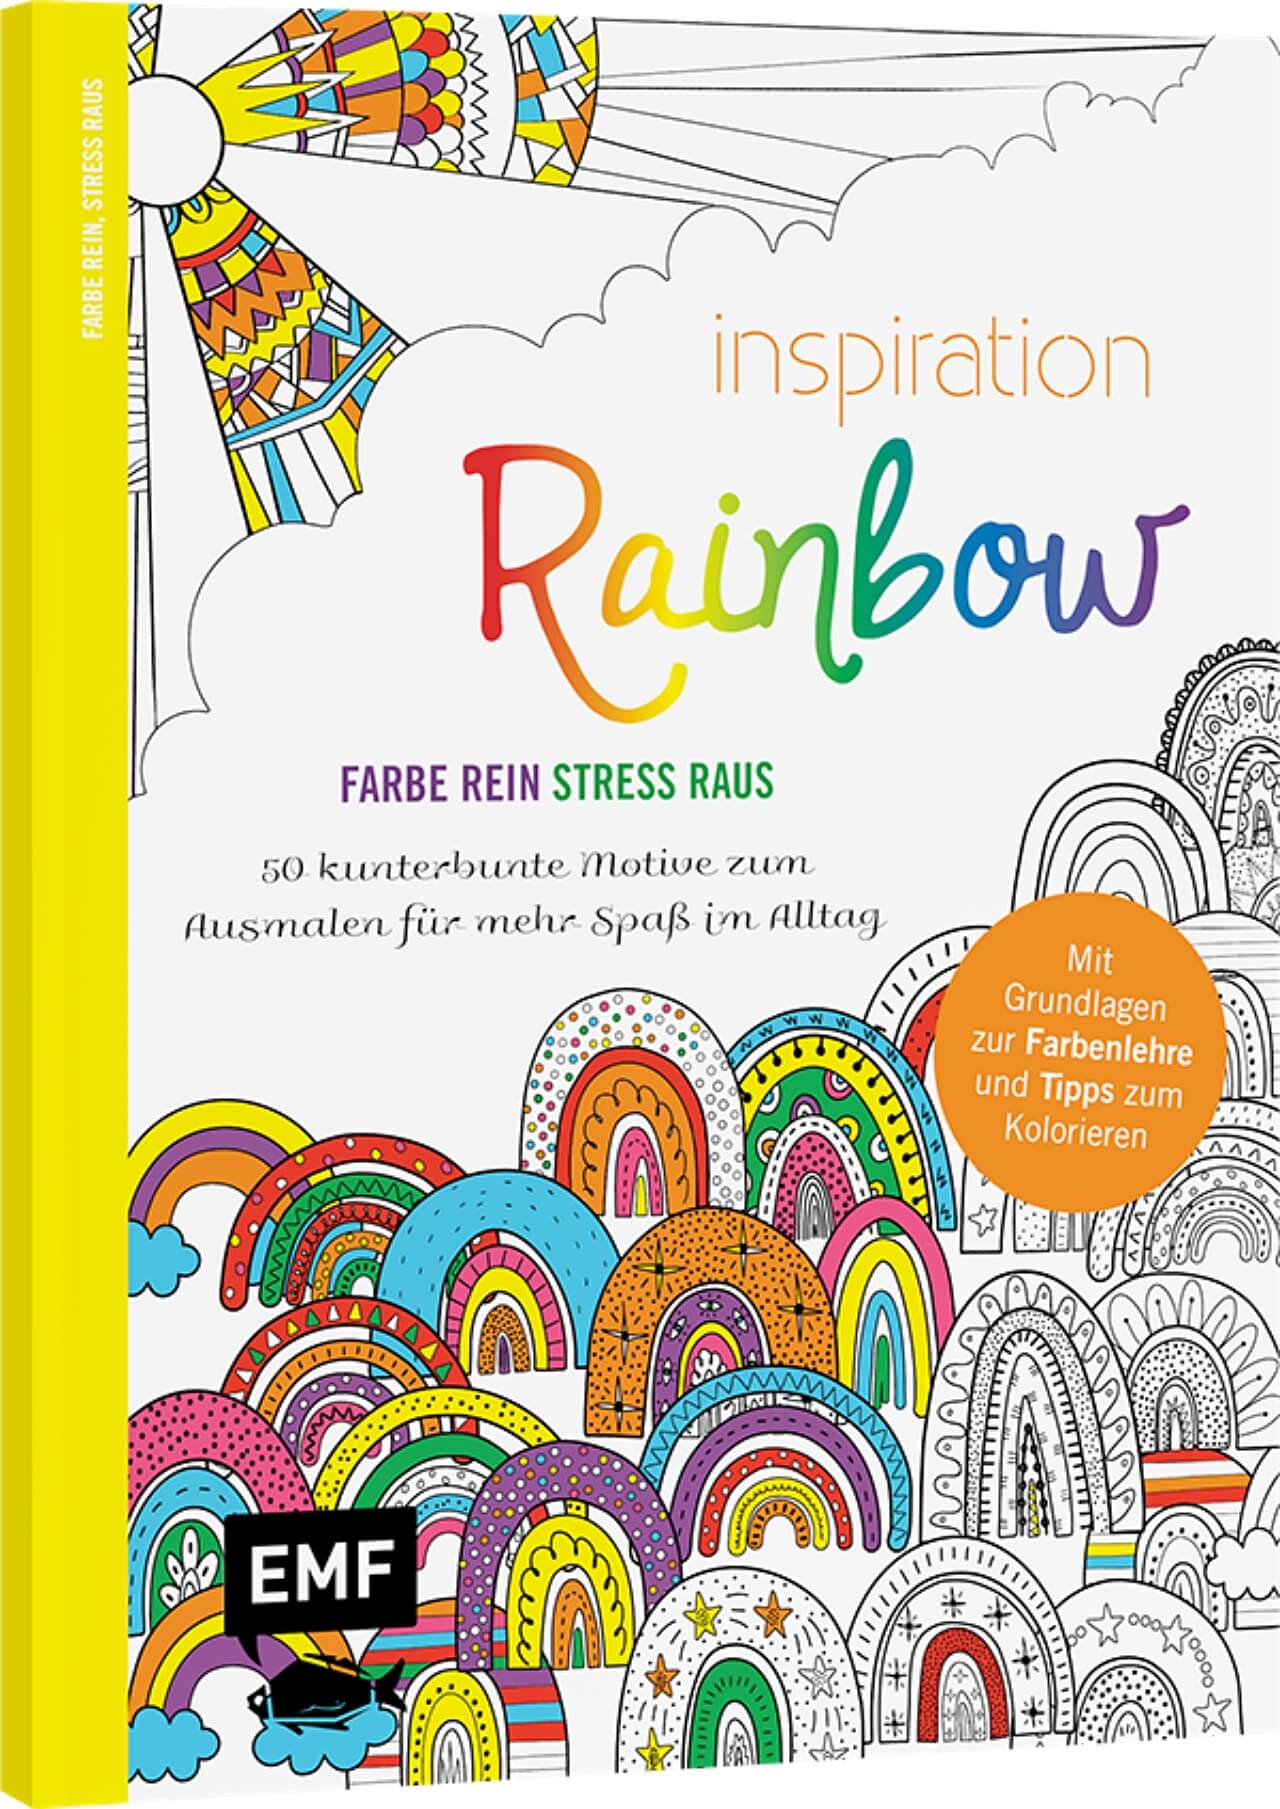 EMF Inspiration Rainbow